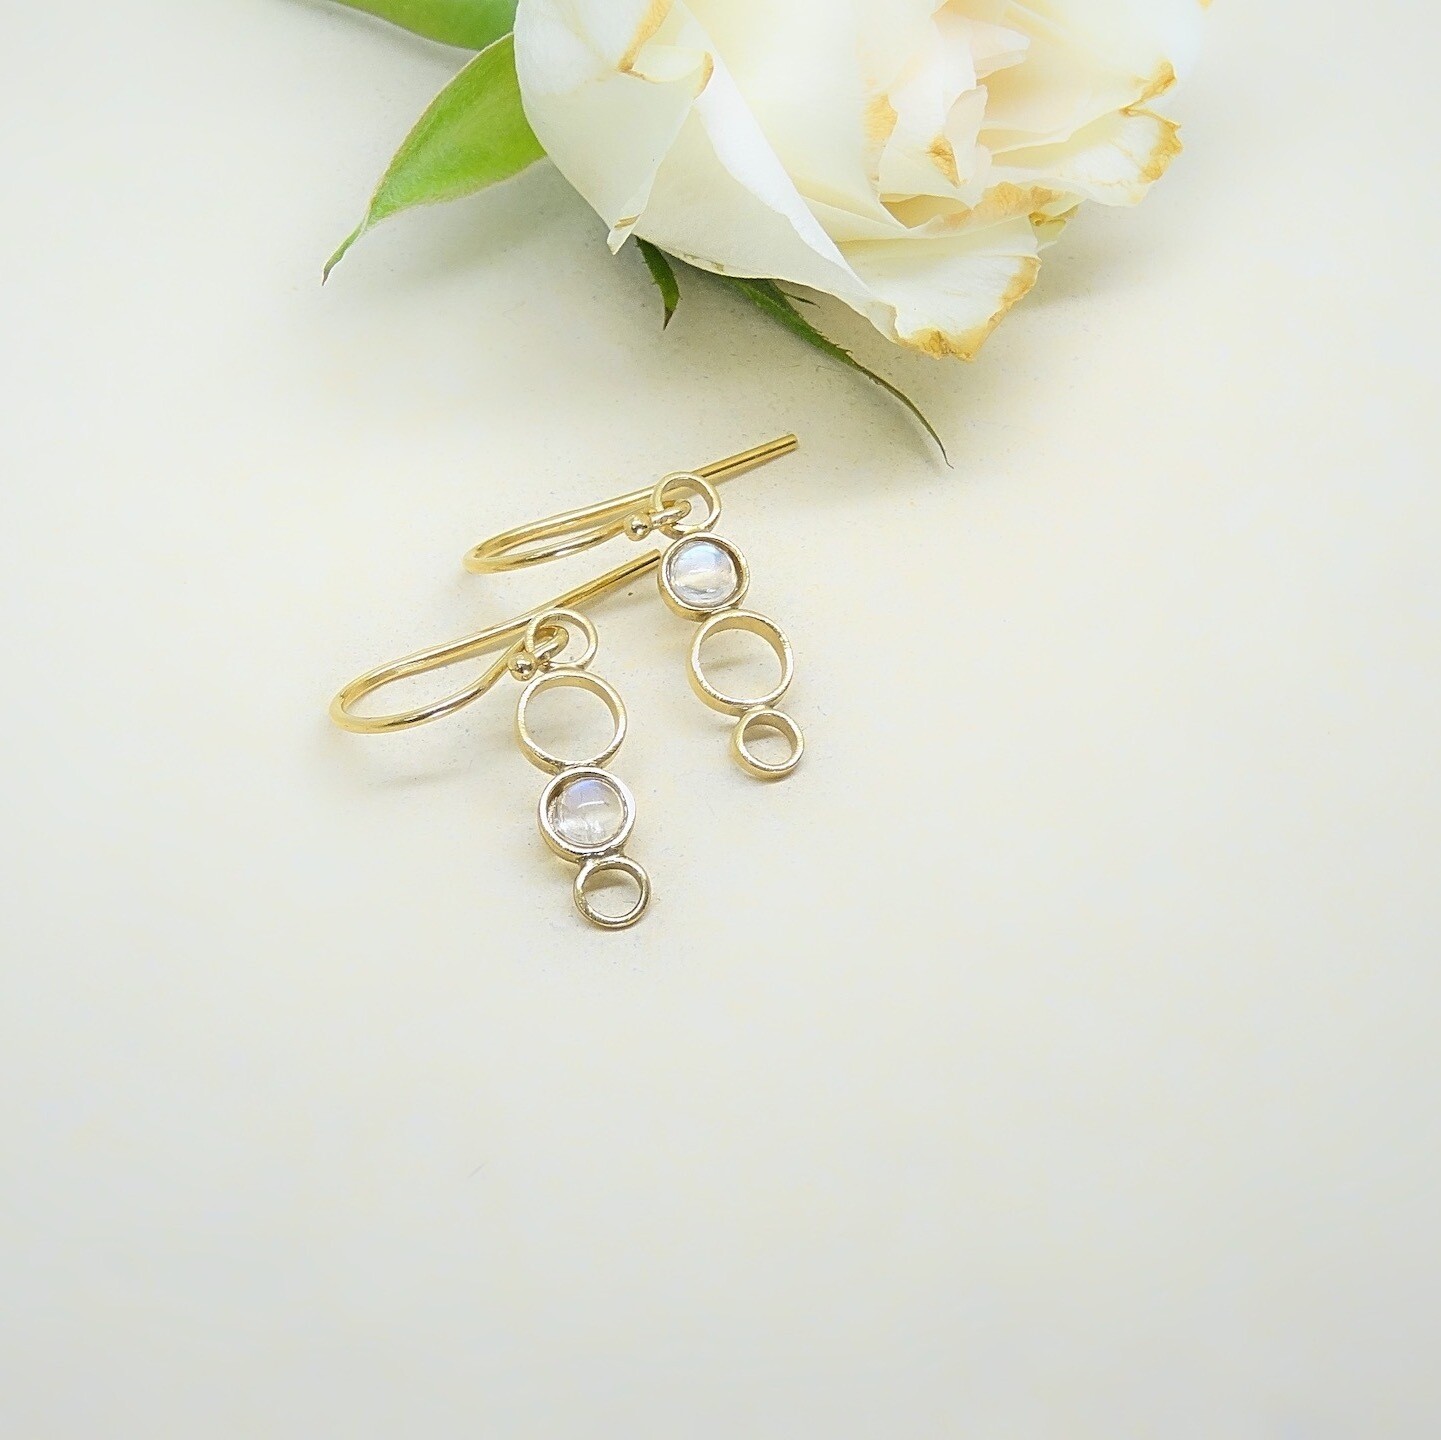 Gold plated earrings - Moonstone